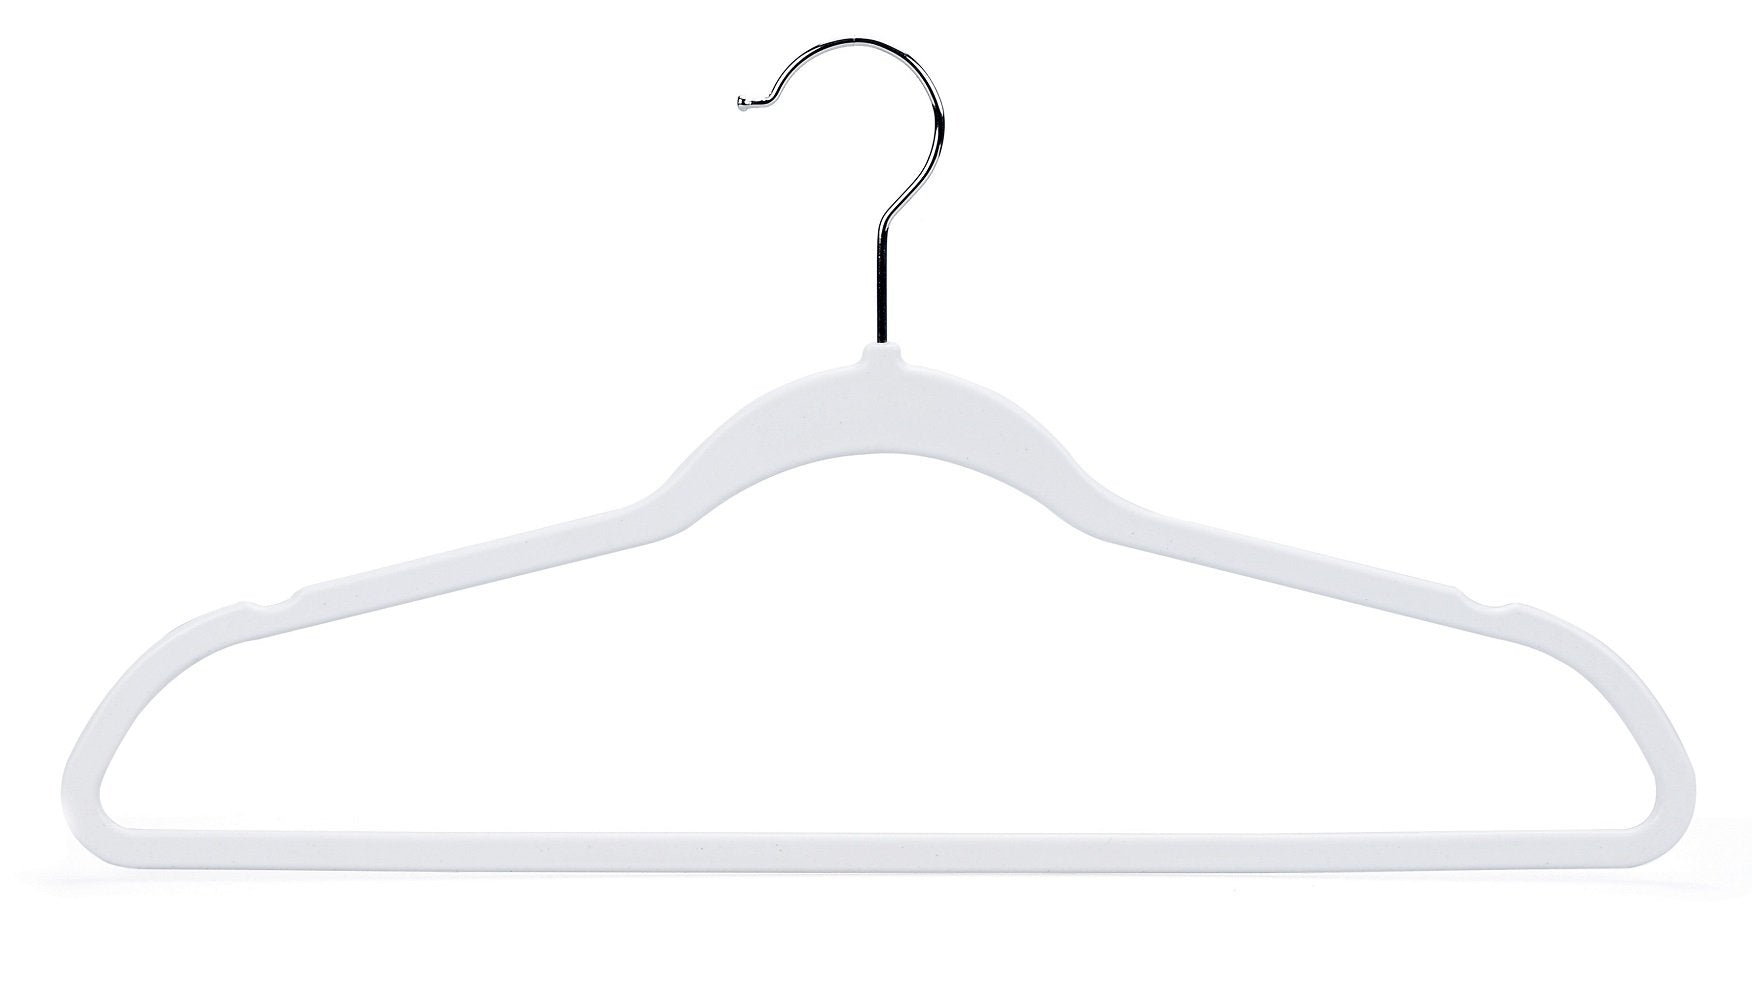 Quality Hangers 50 Pack Non-Velvet Plastic Hangers for Clothes - Heavy Duty Coat Hanger Set - Space-Saving Closet Hangers with Chrome Swivel Hook, Functional Non-Flocked Hangers - Cream White  - Acceptable